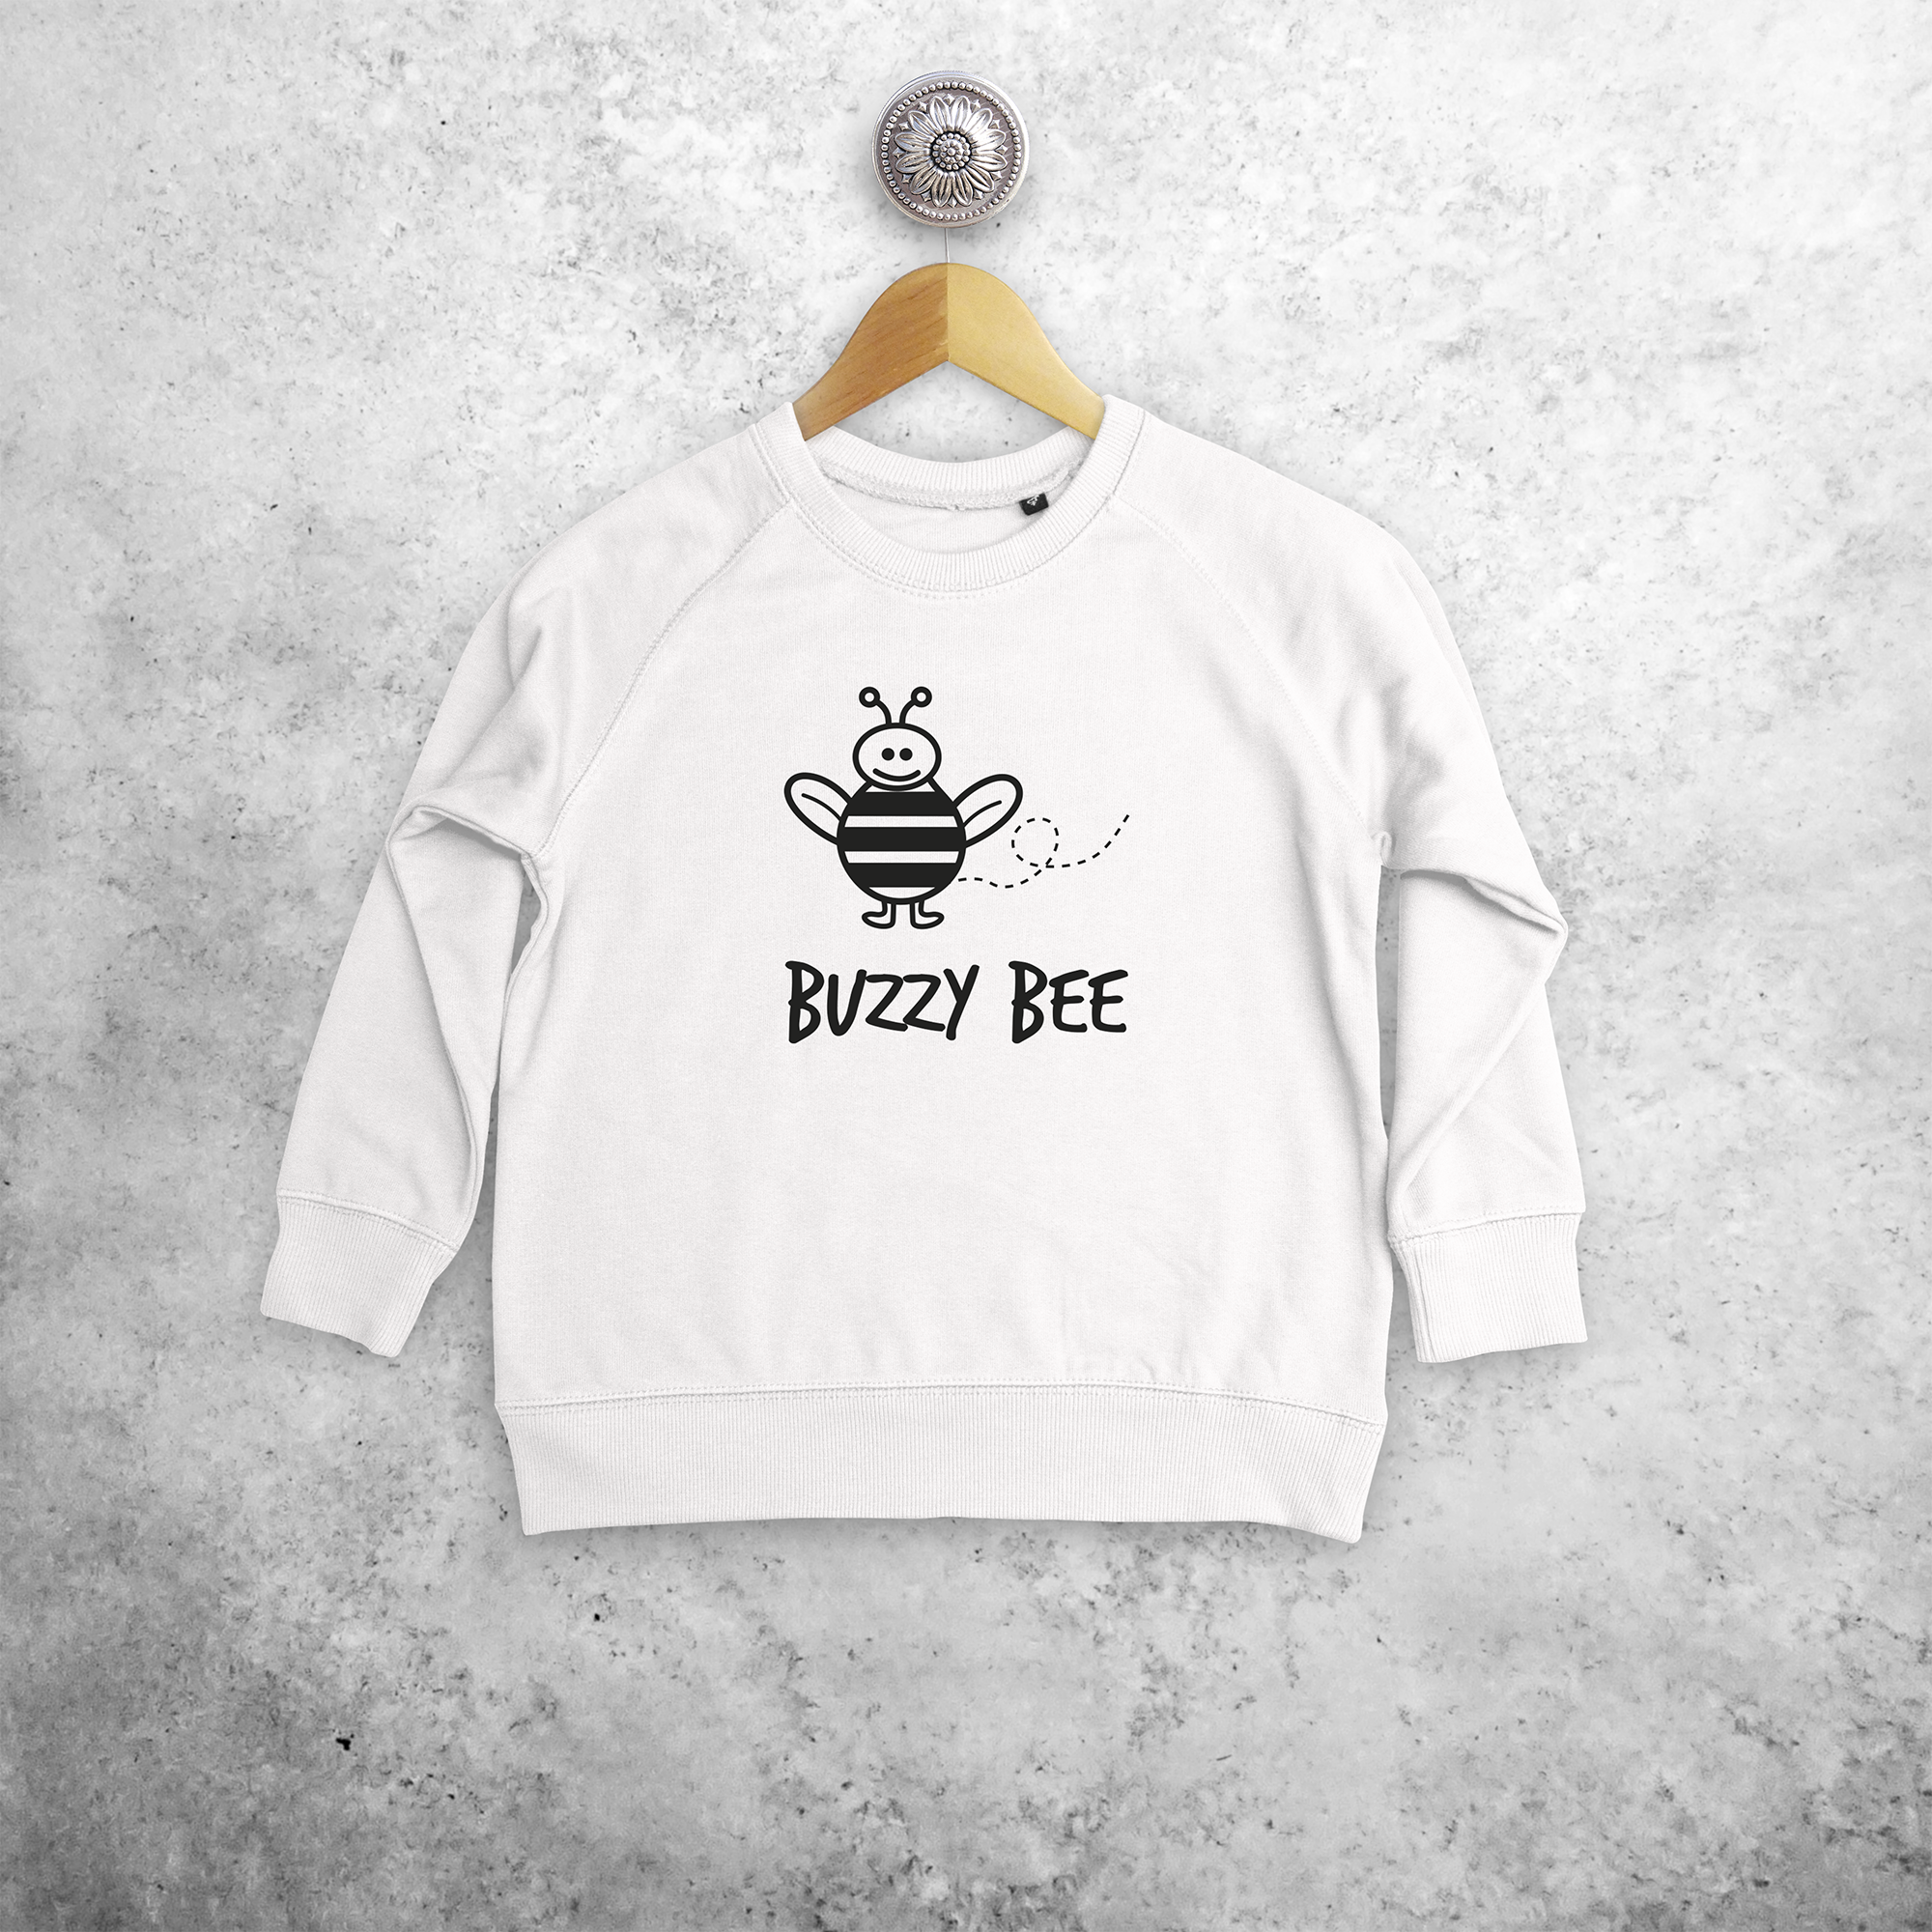 'Buzzy bee' kids sweater